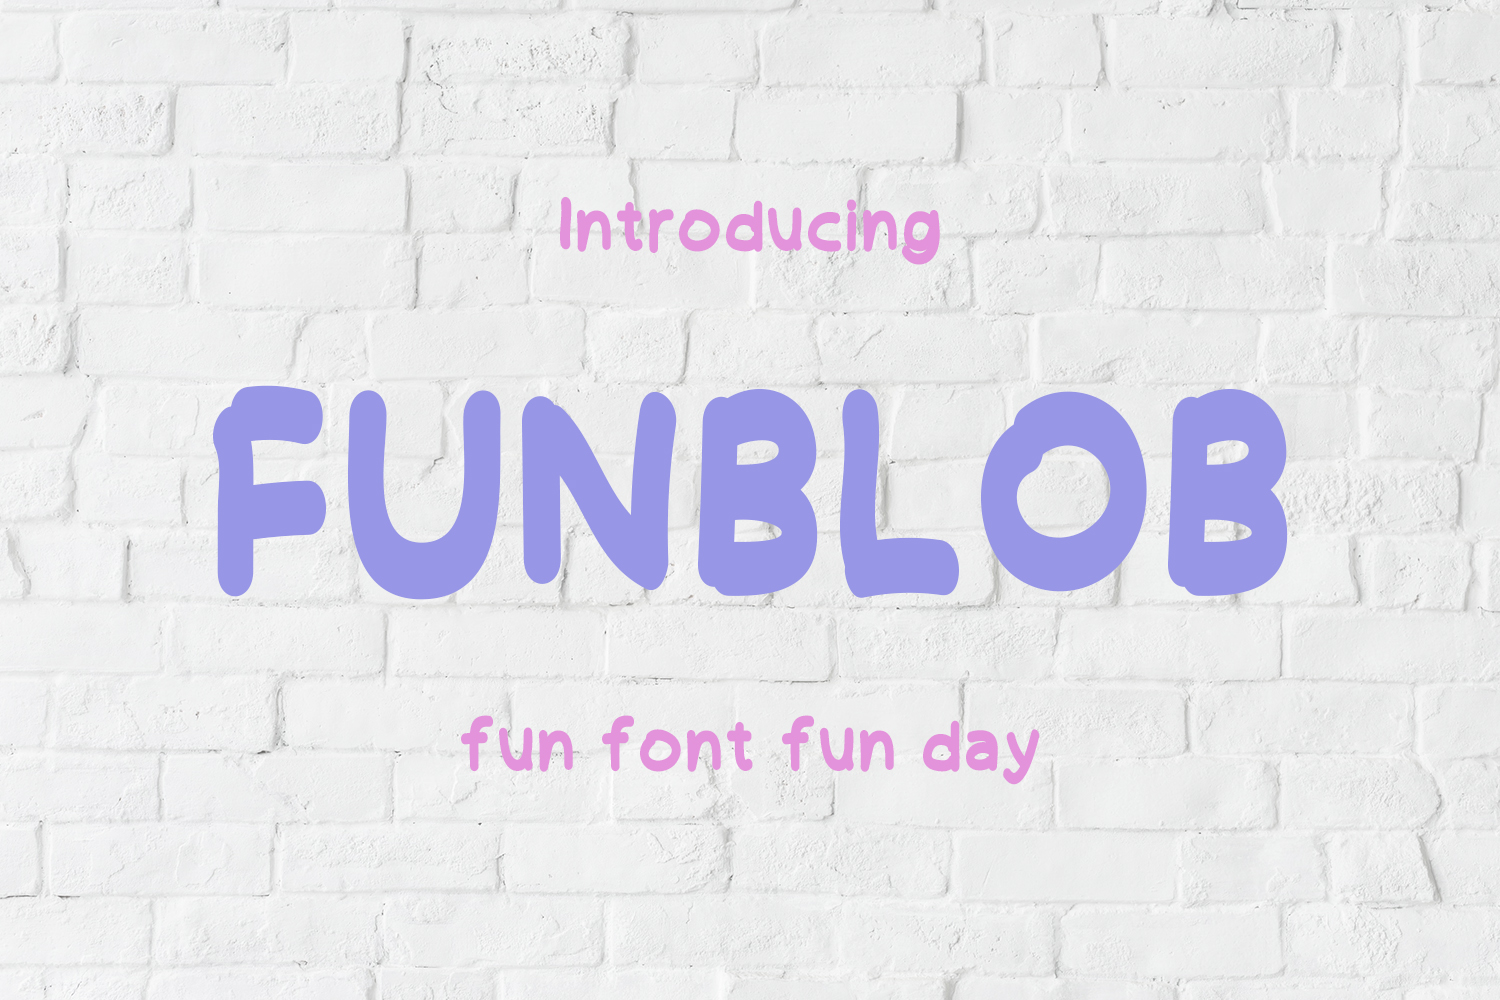 Funblob Free font